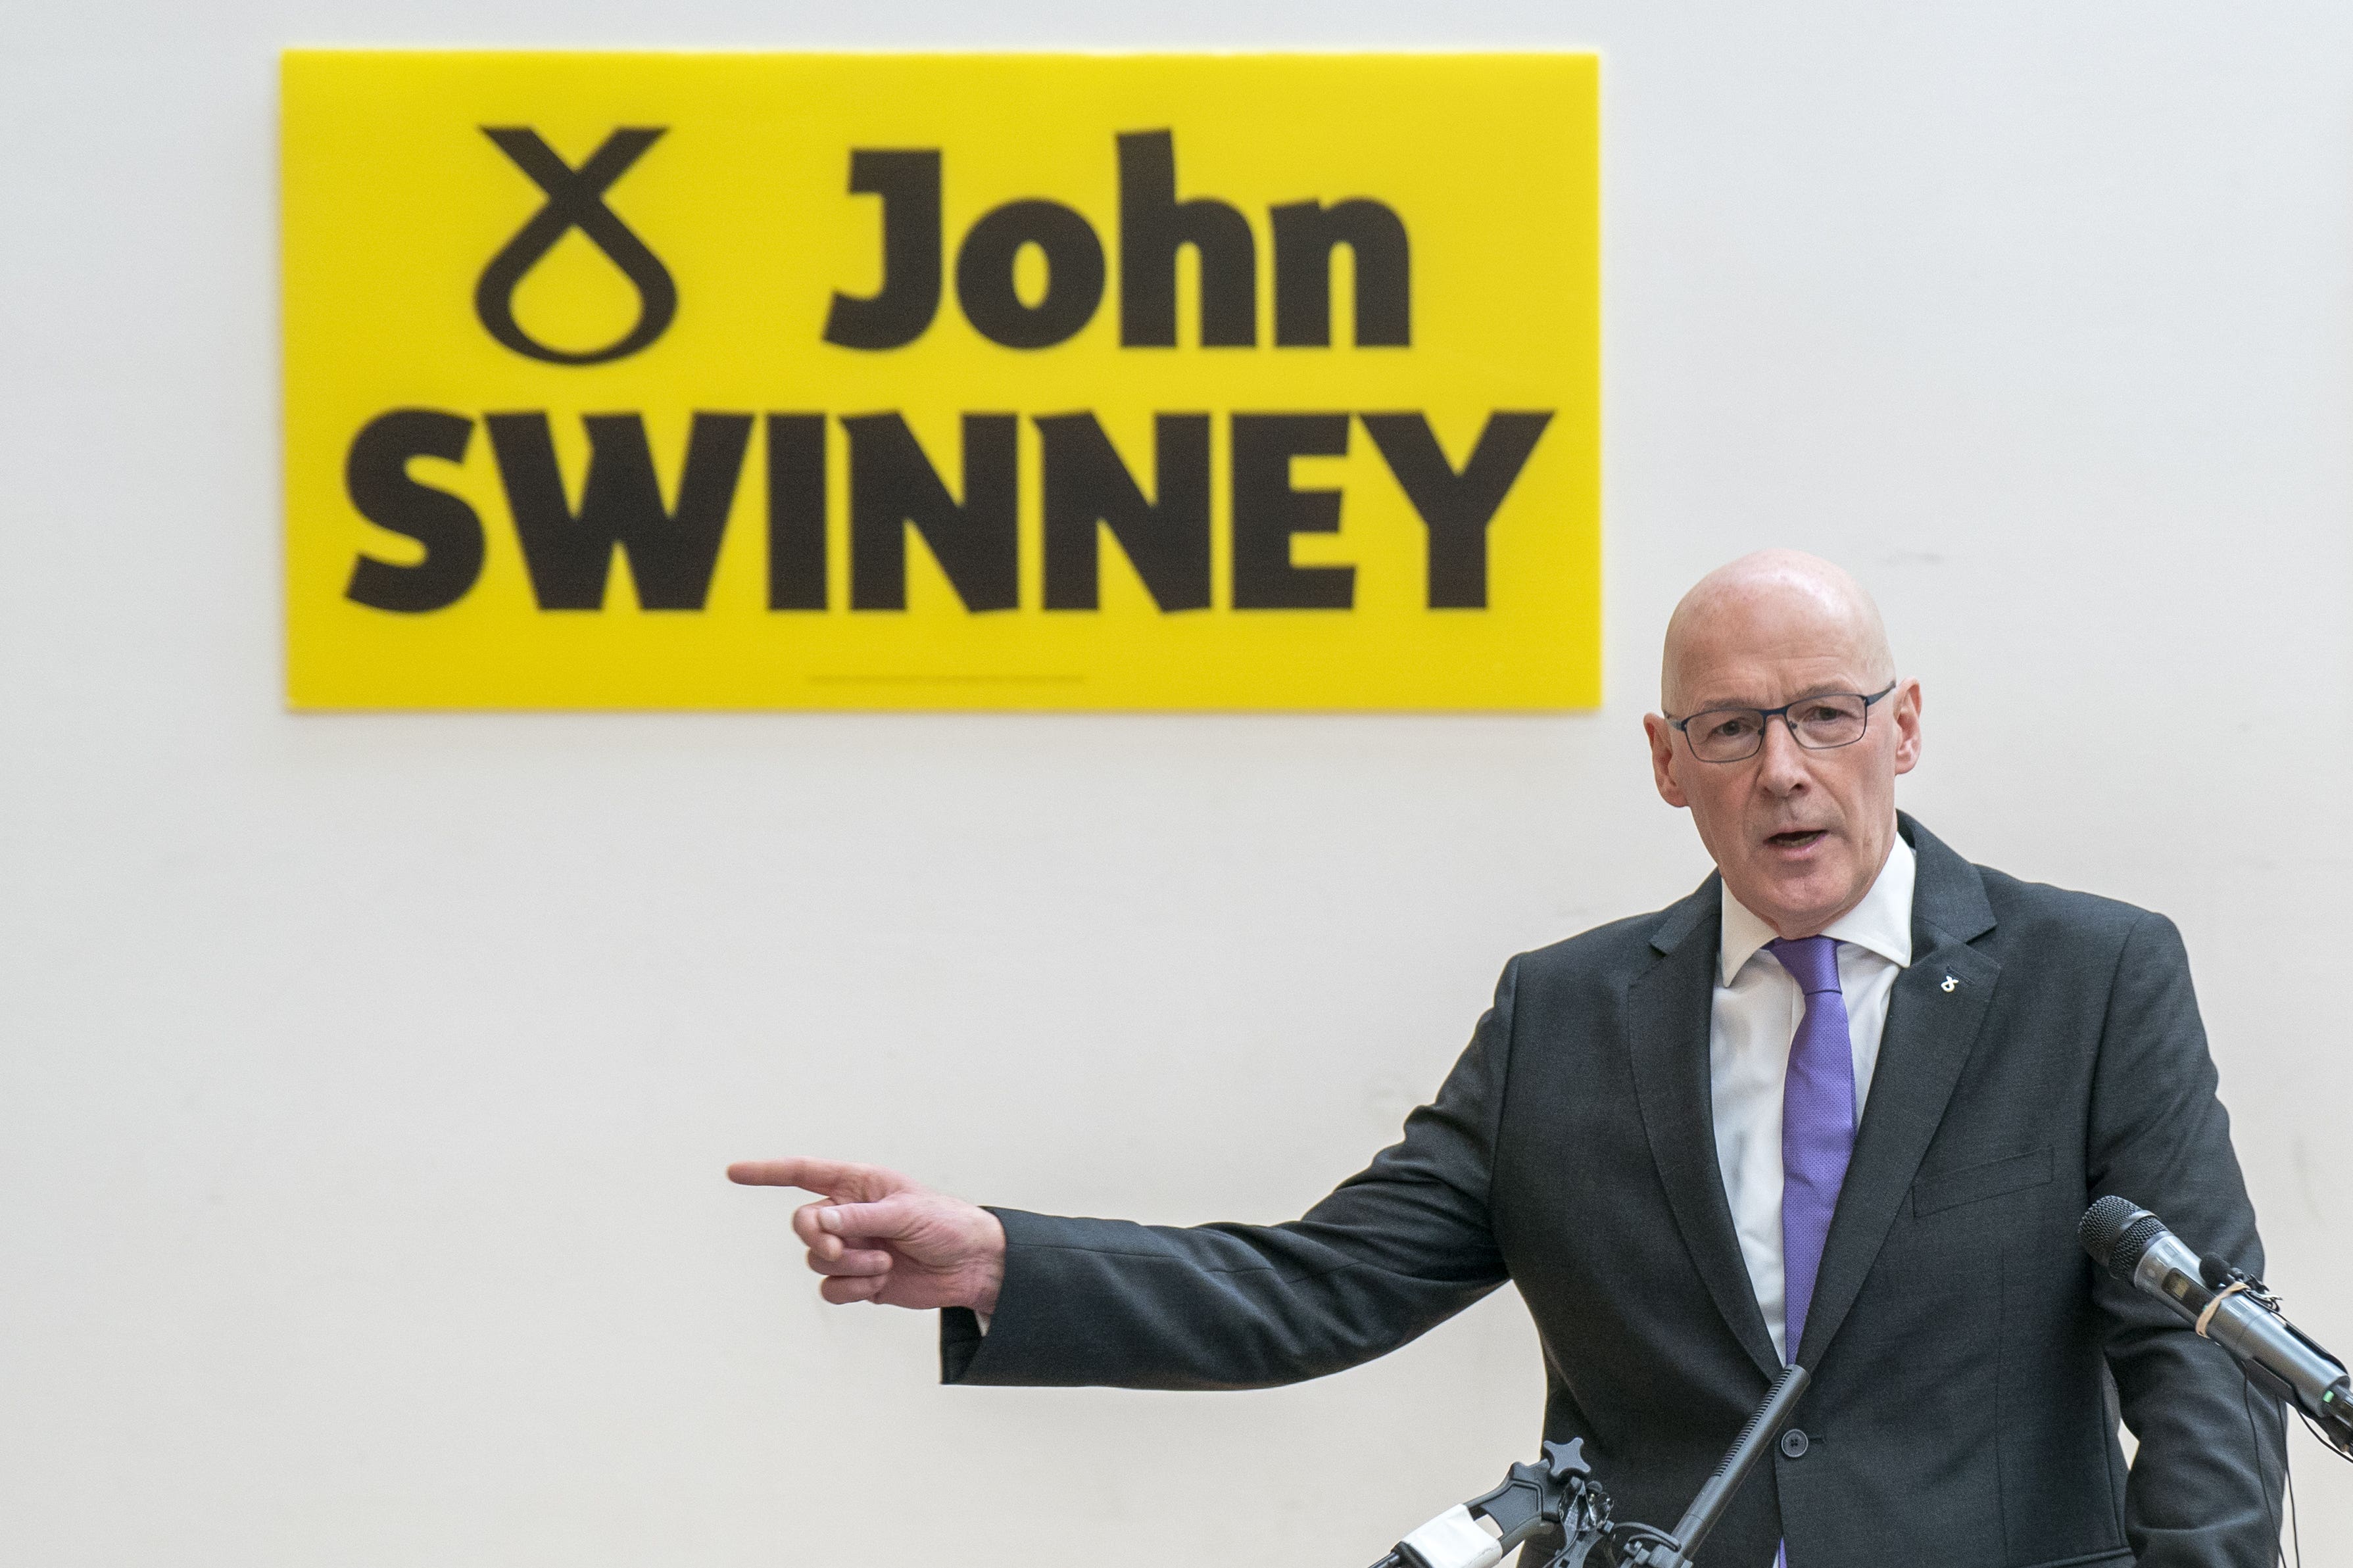 John Swinney will run for the top job in Scottish politics (Jane Barlow/PA)